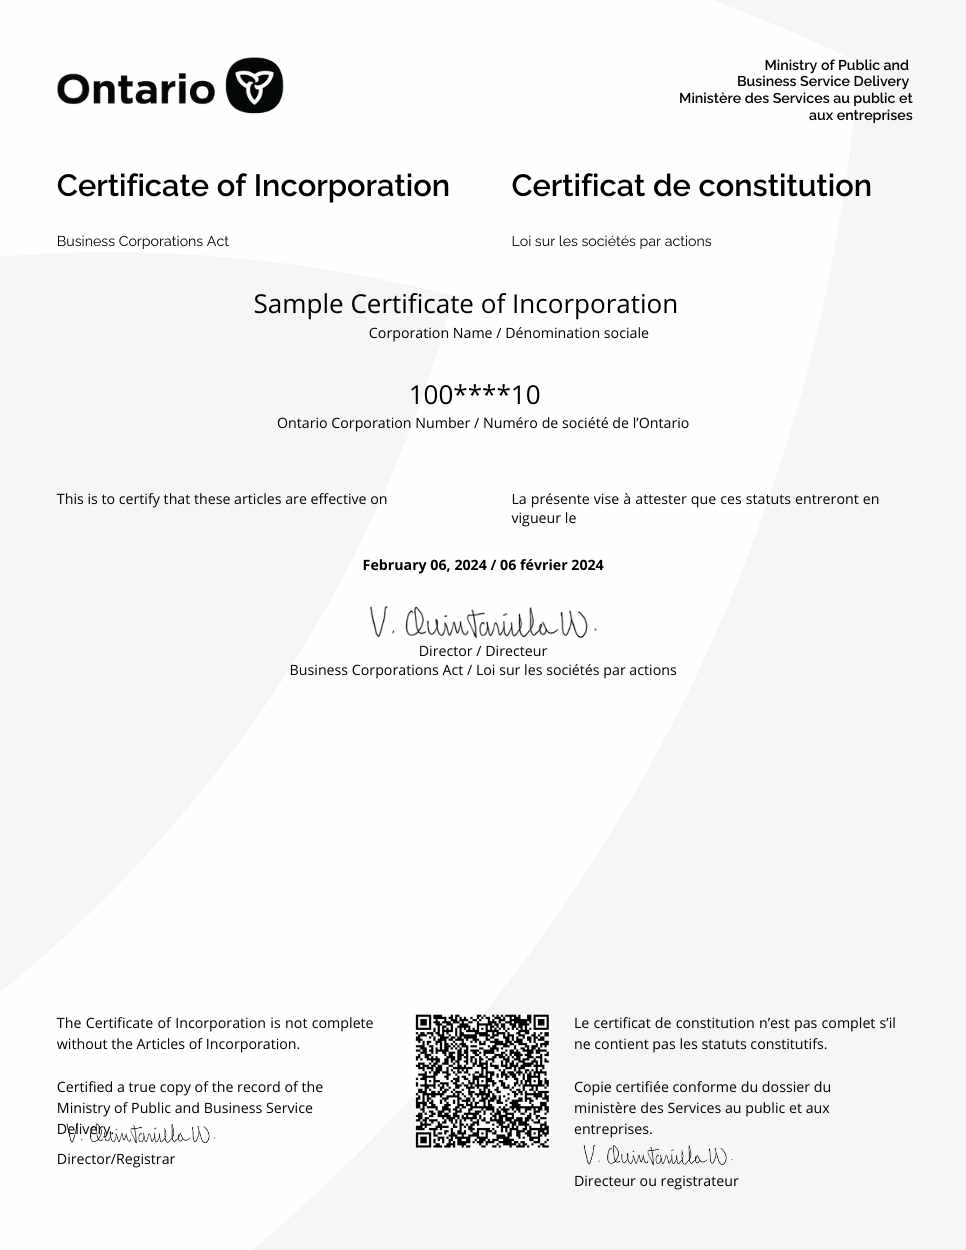 Ontario Certificate of Incorporation sample